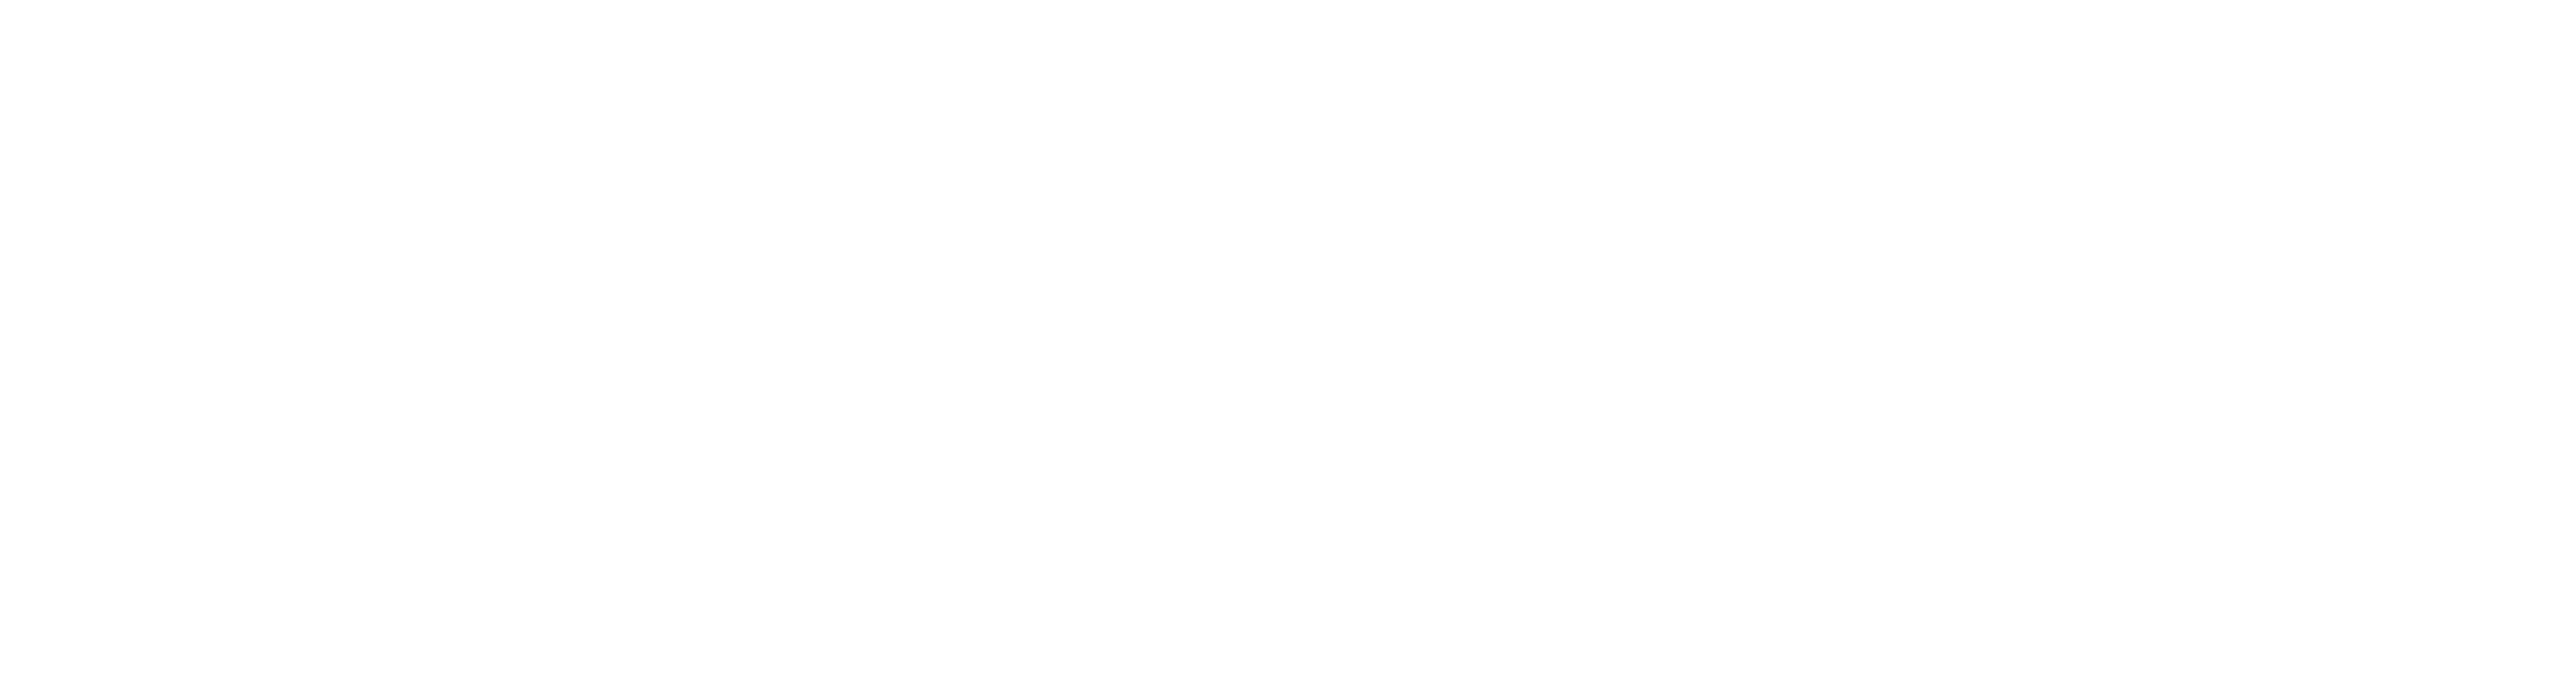 Ivan's Childhood logo